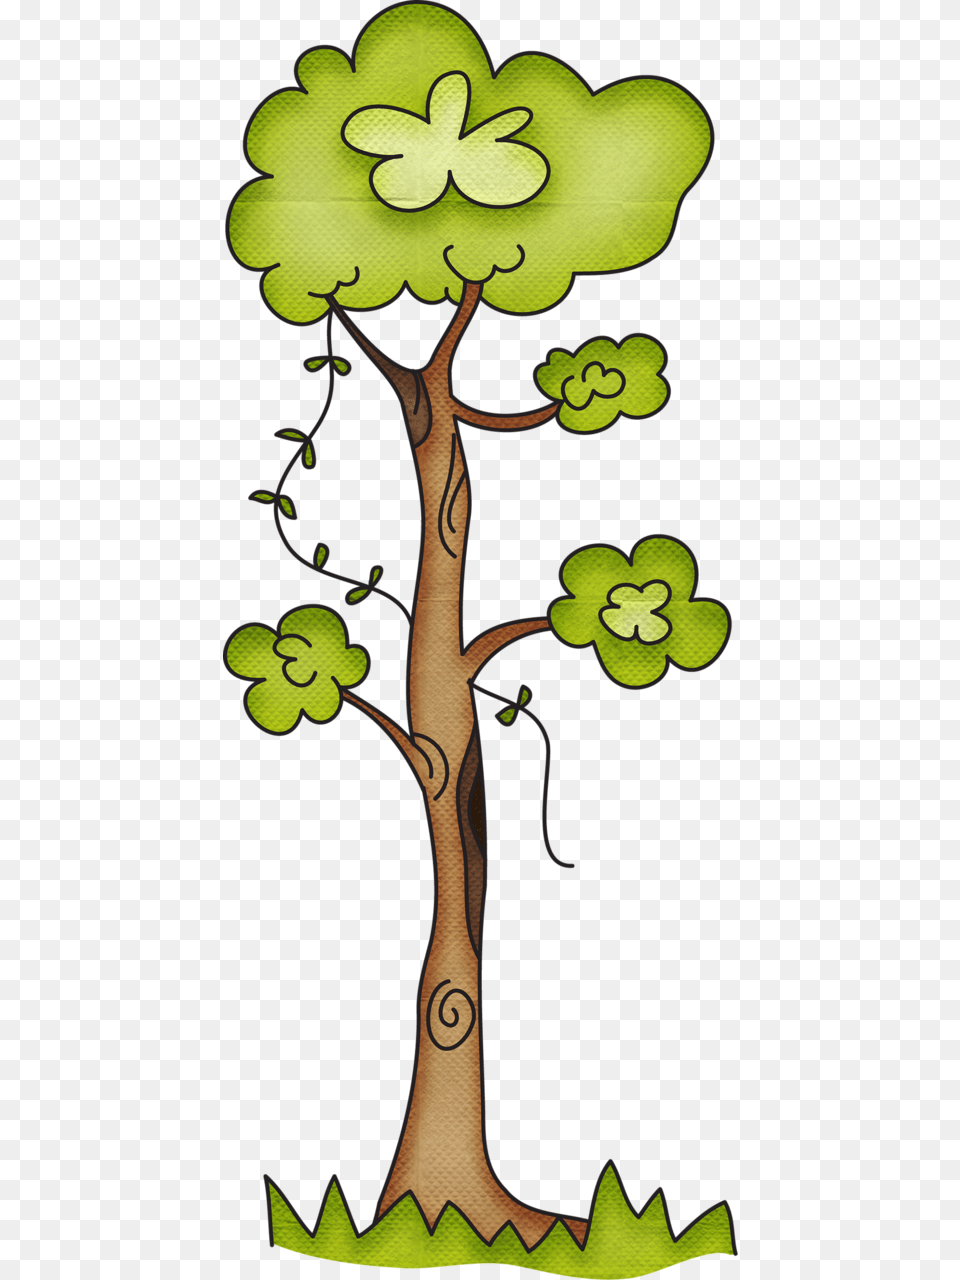 Tree Clipart Tree Patterns Mosaic Patterns Cartoon Convite Cha De Bebe Safari, Plant, Tree Trunk, Green, Flower Free Png